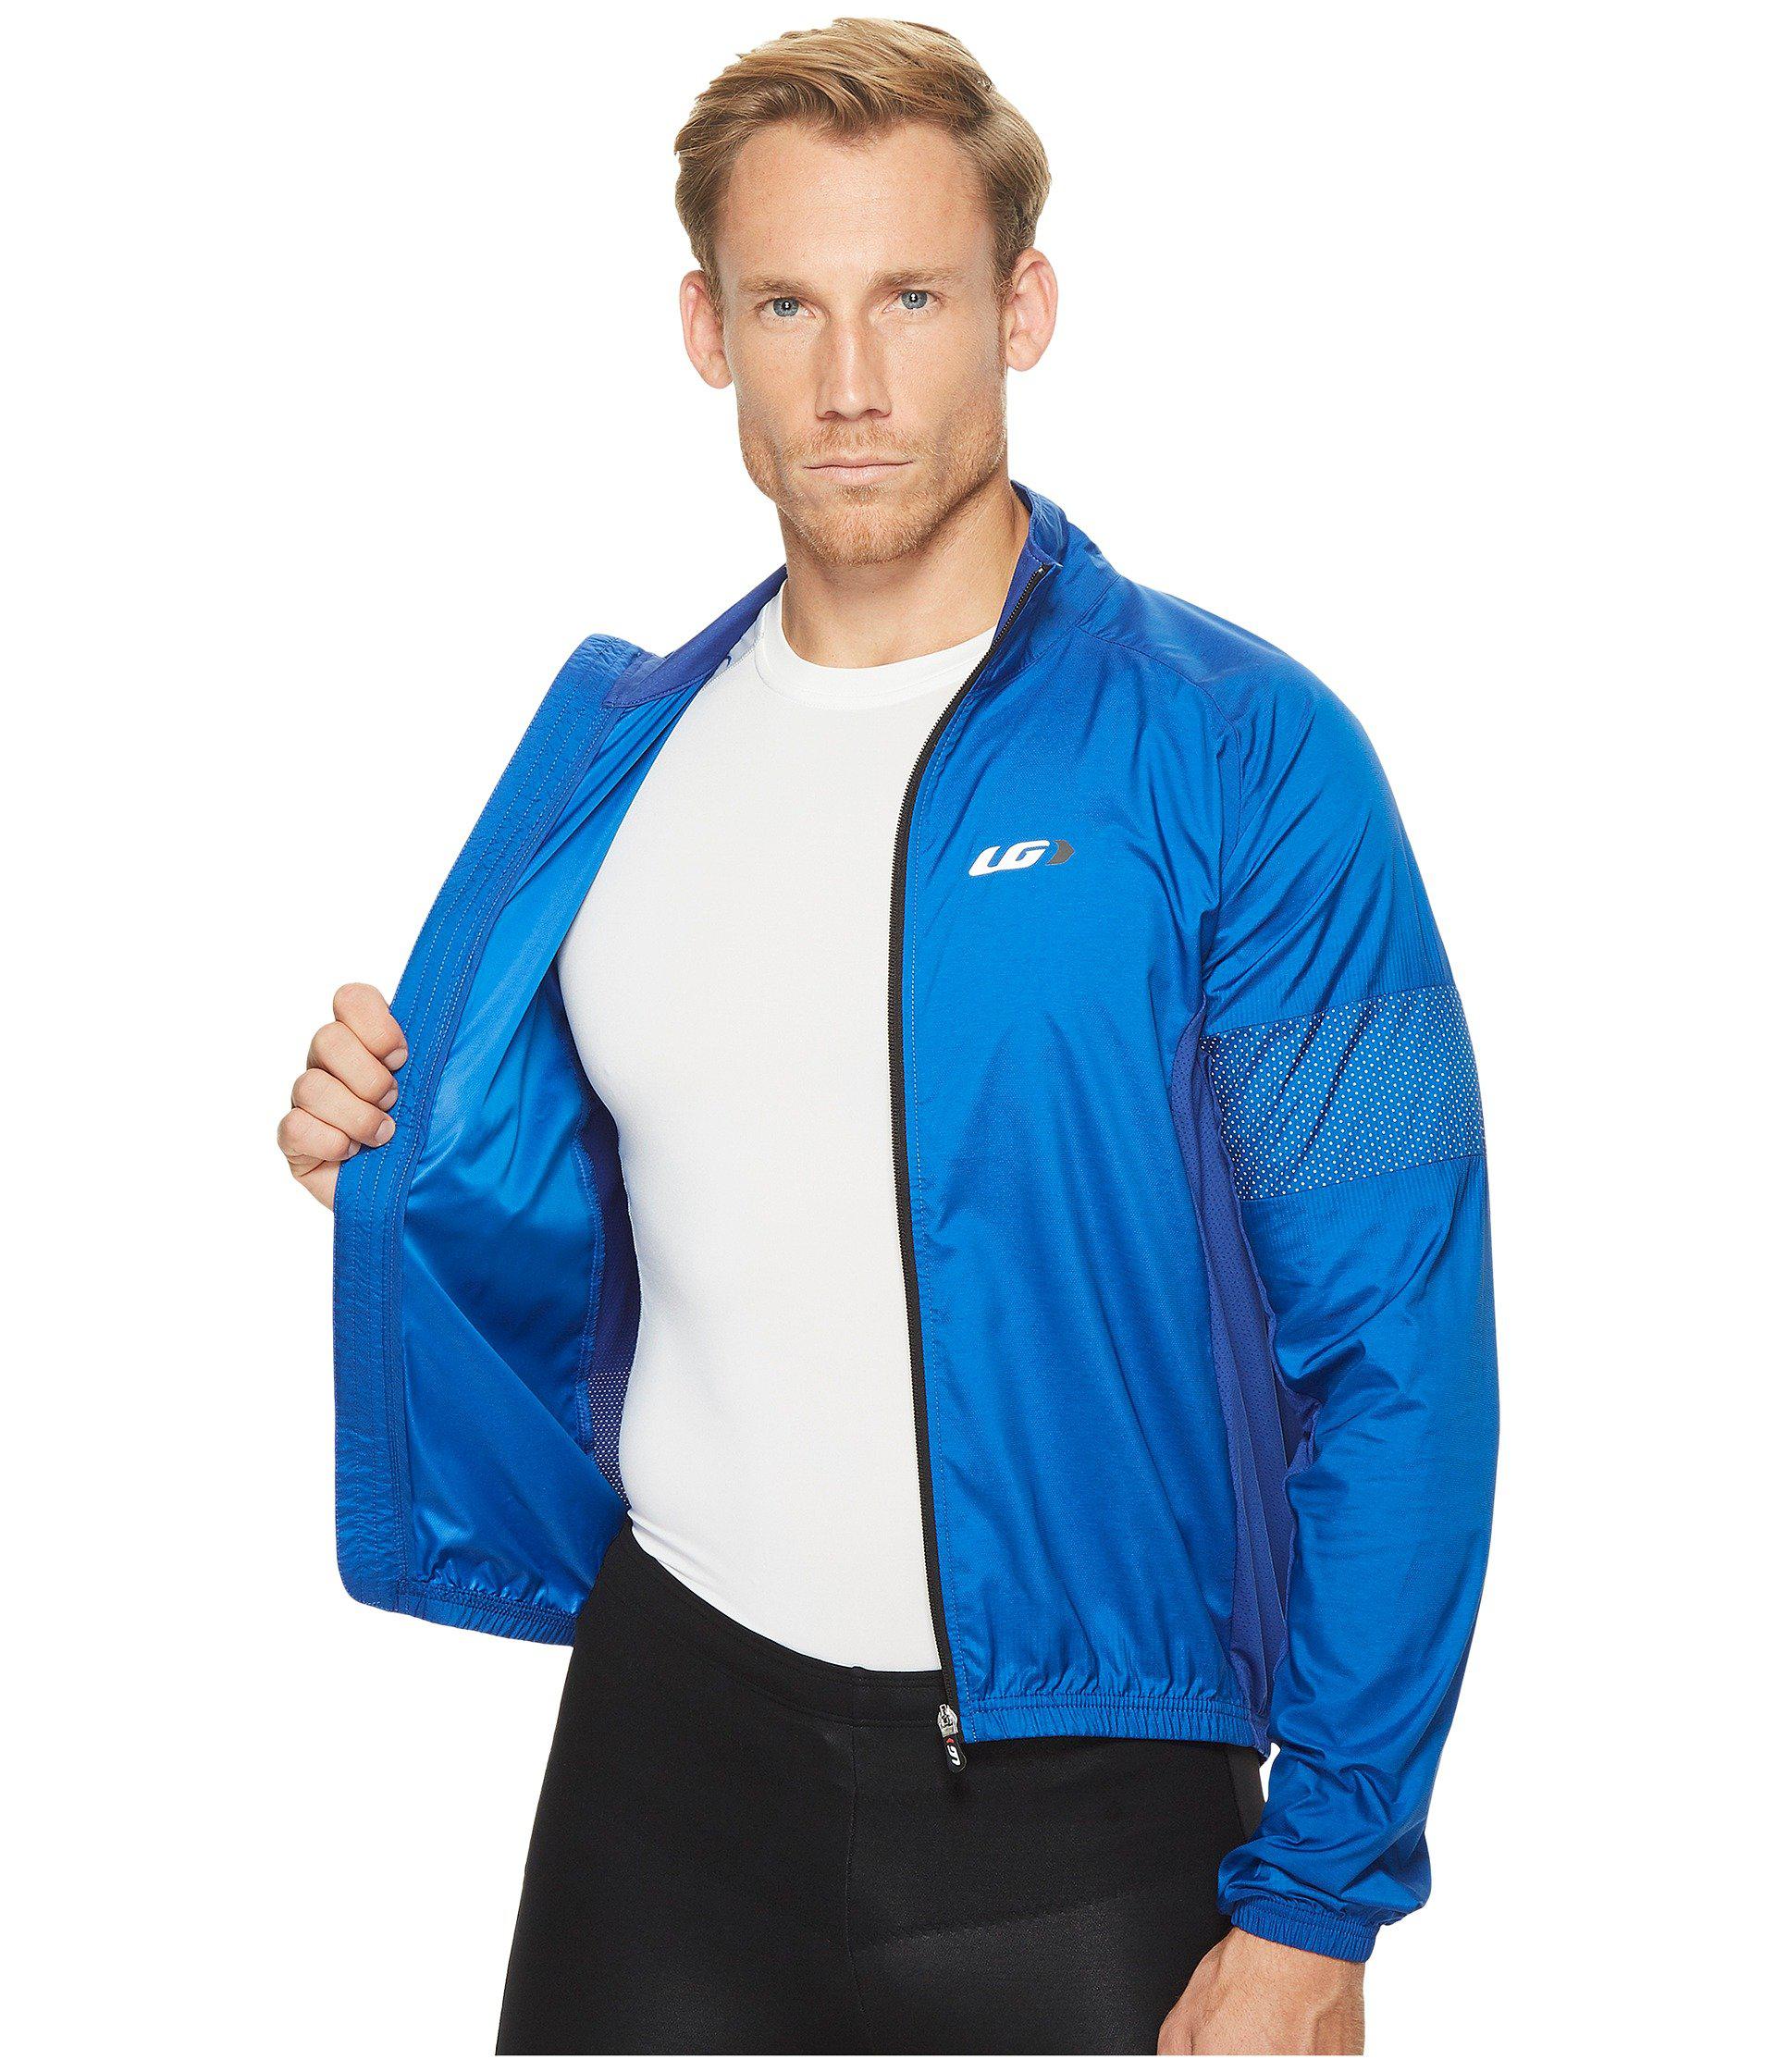 Louis Garneau Synthetic Modesto 3 Cycling Jacket in Cobalt Blue (Blue) for Men - Lyst